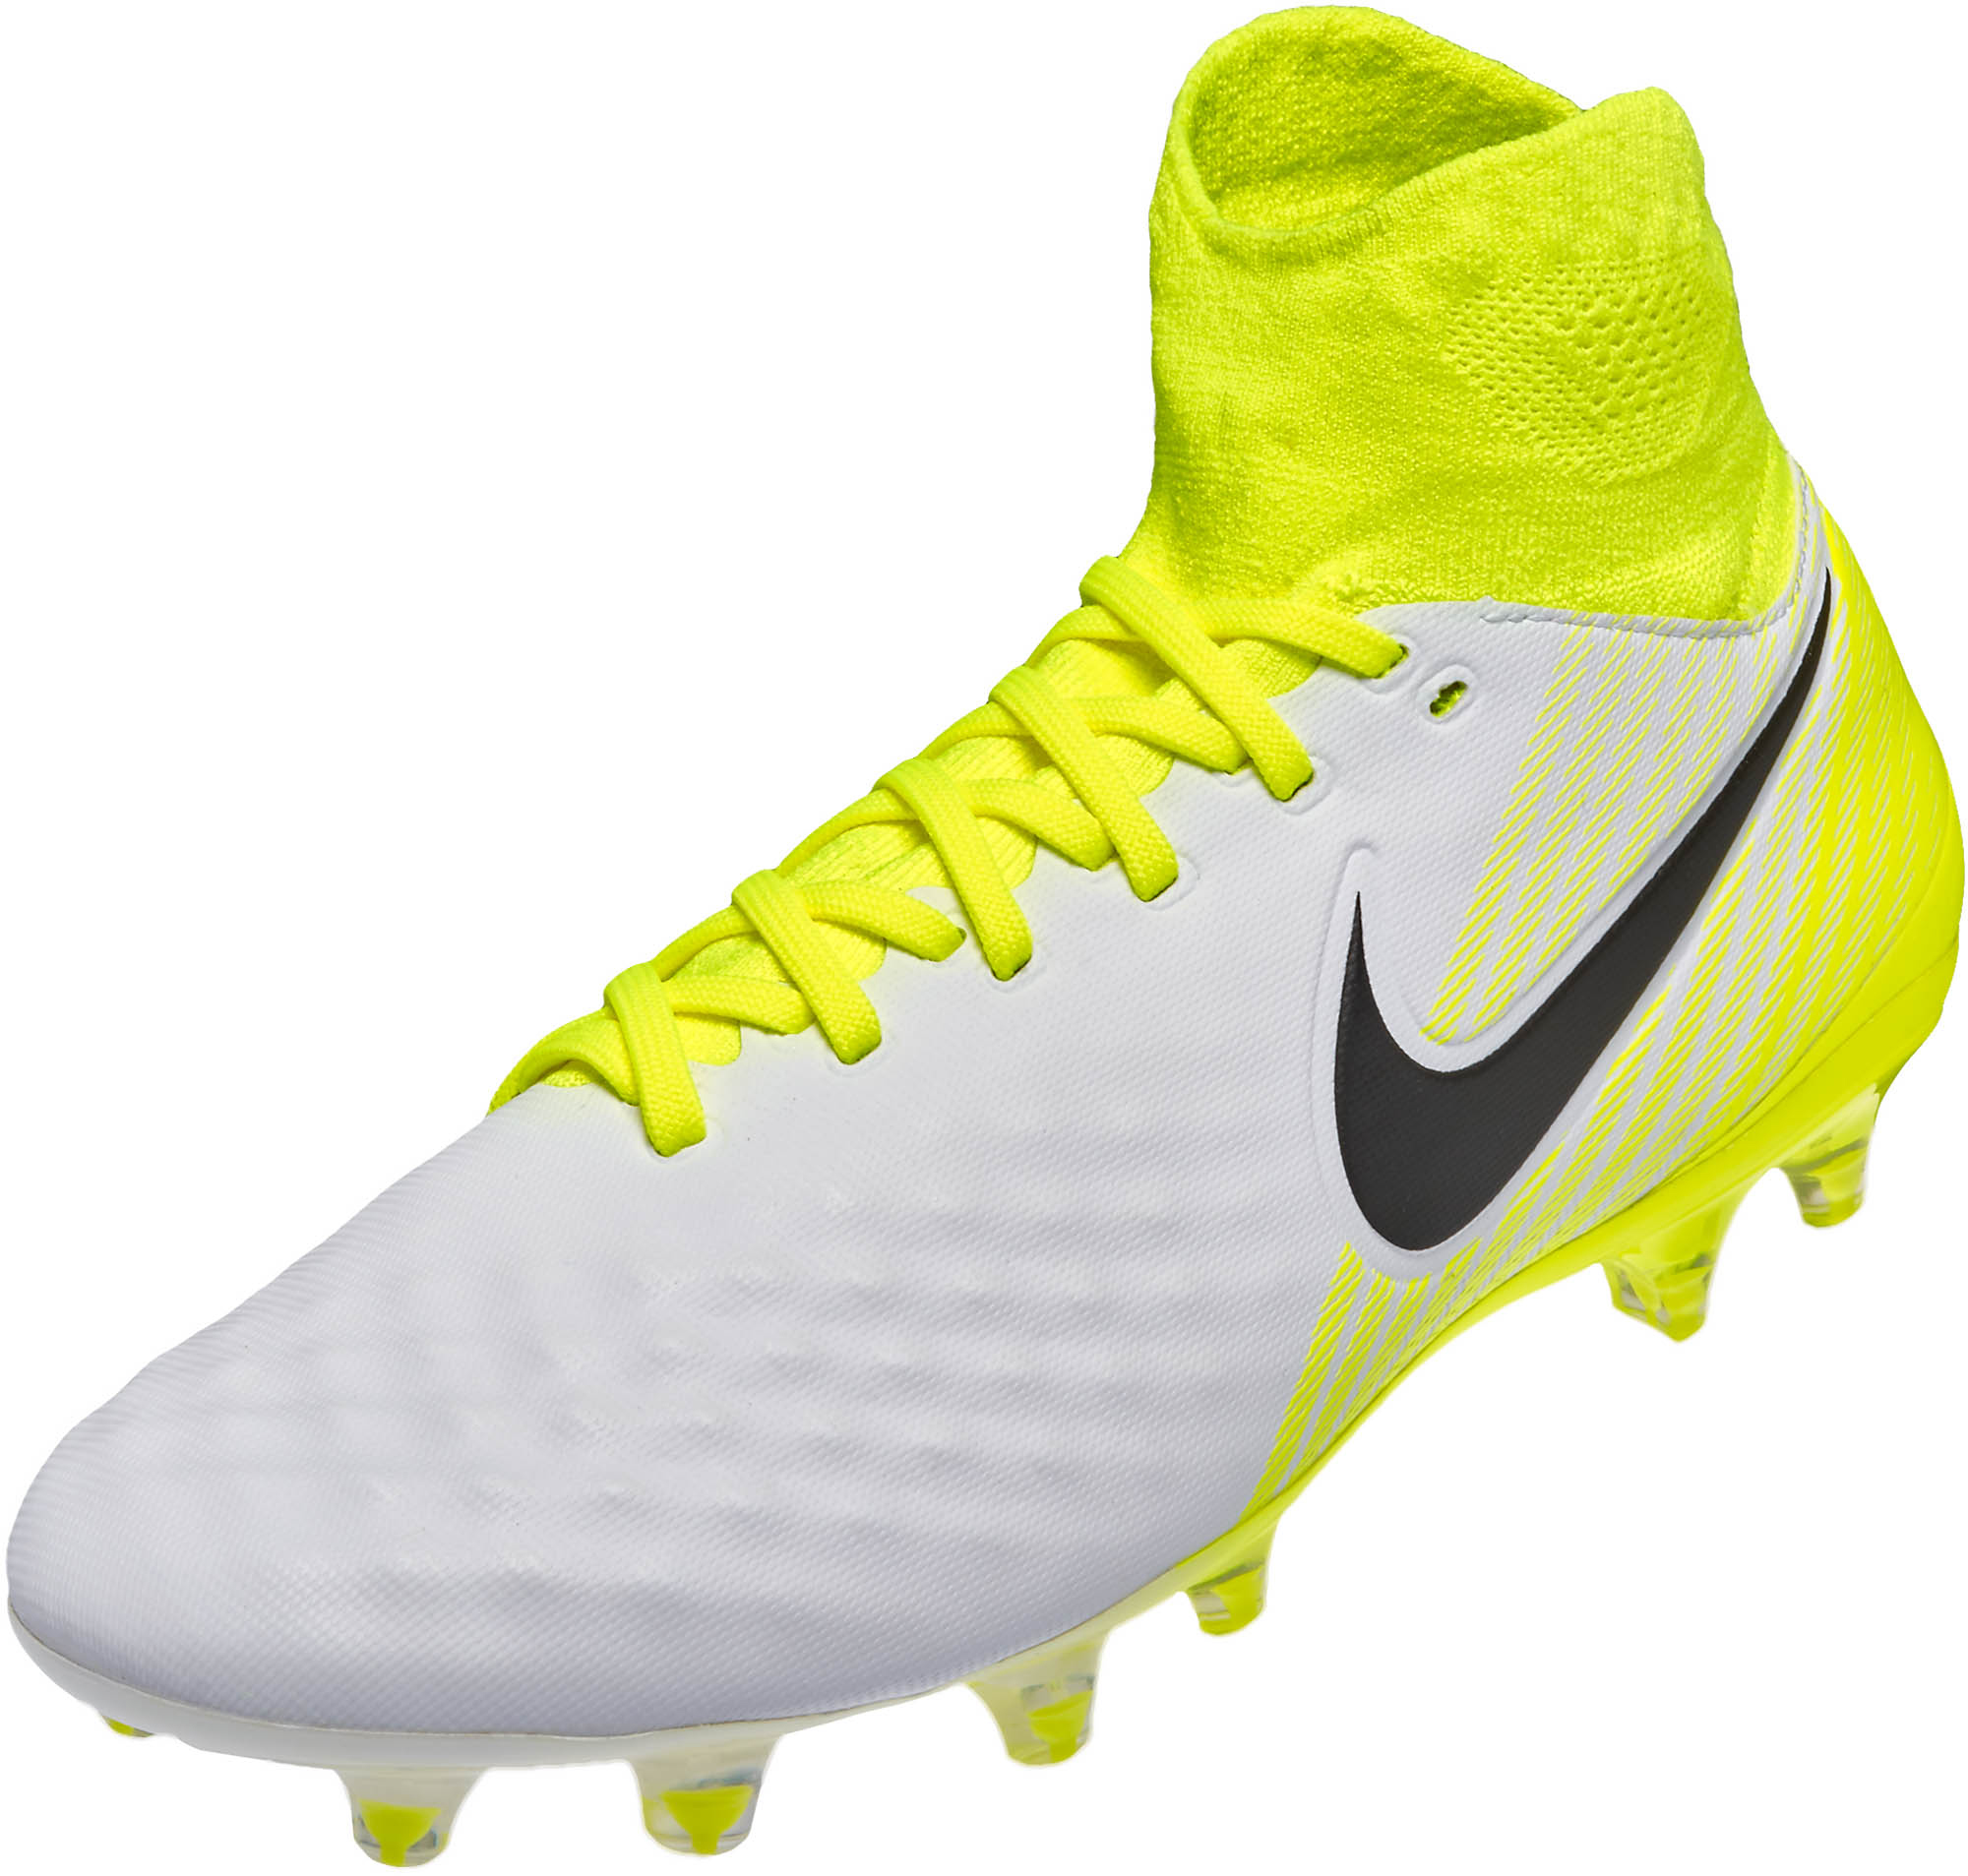 magista soccer boots